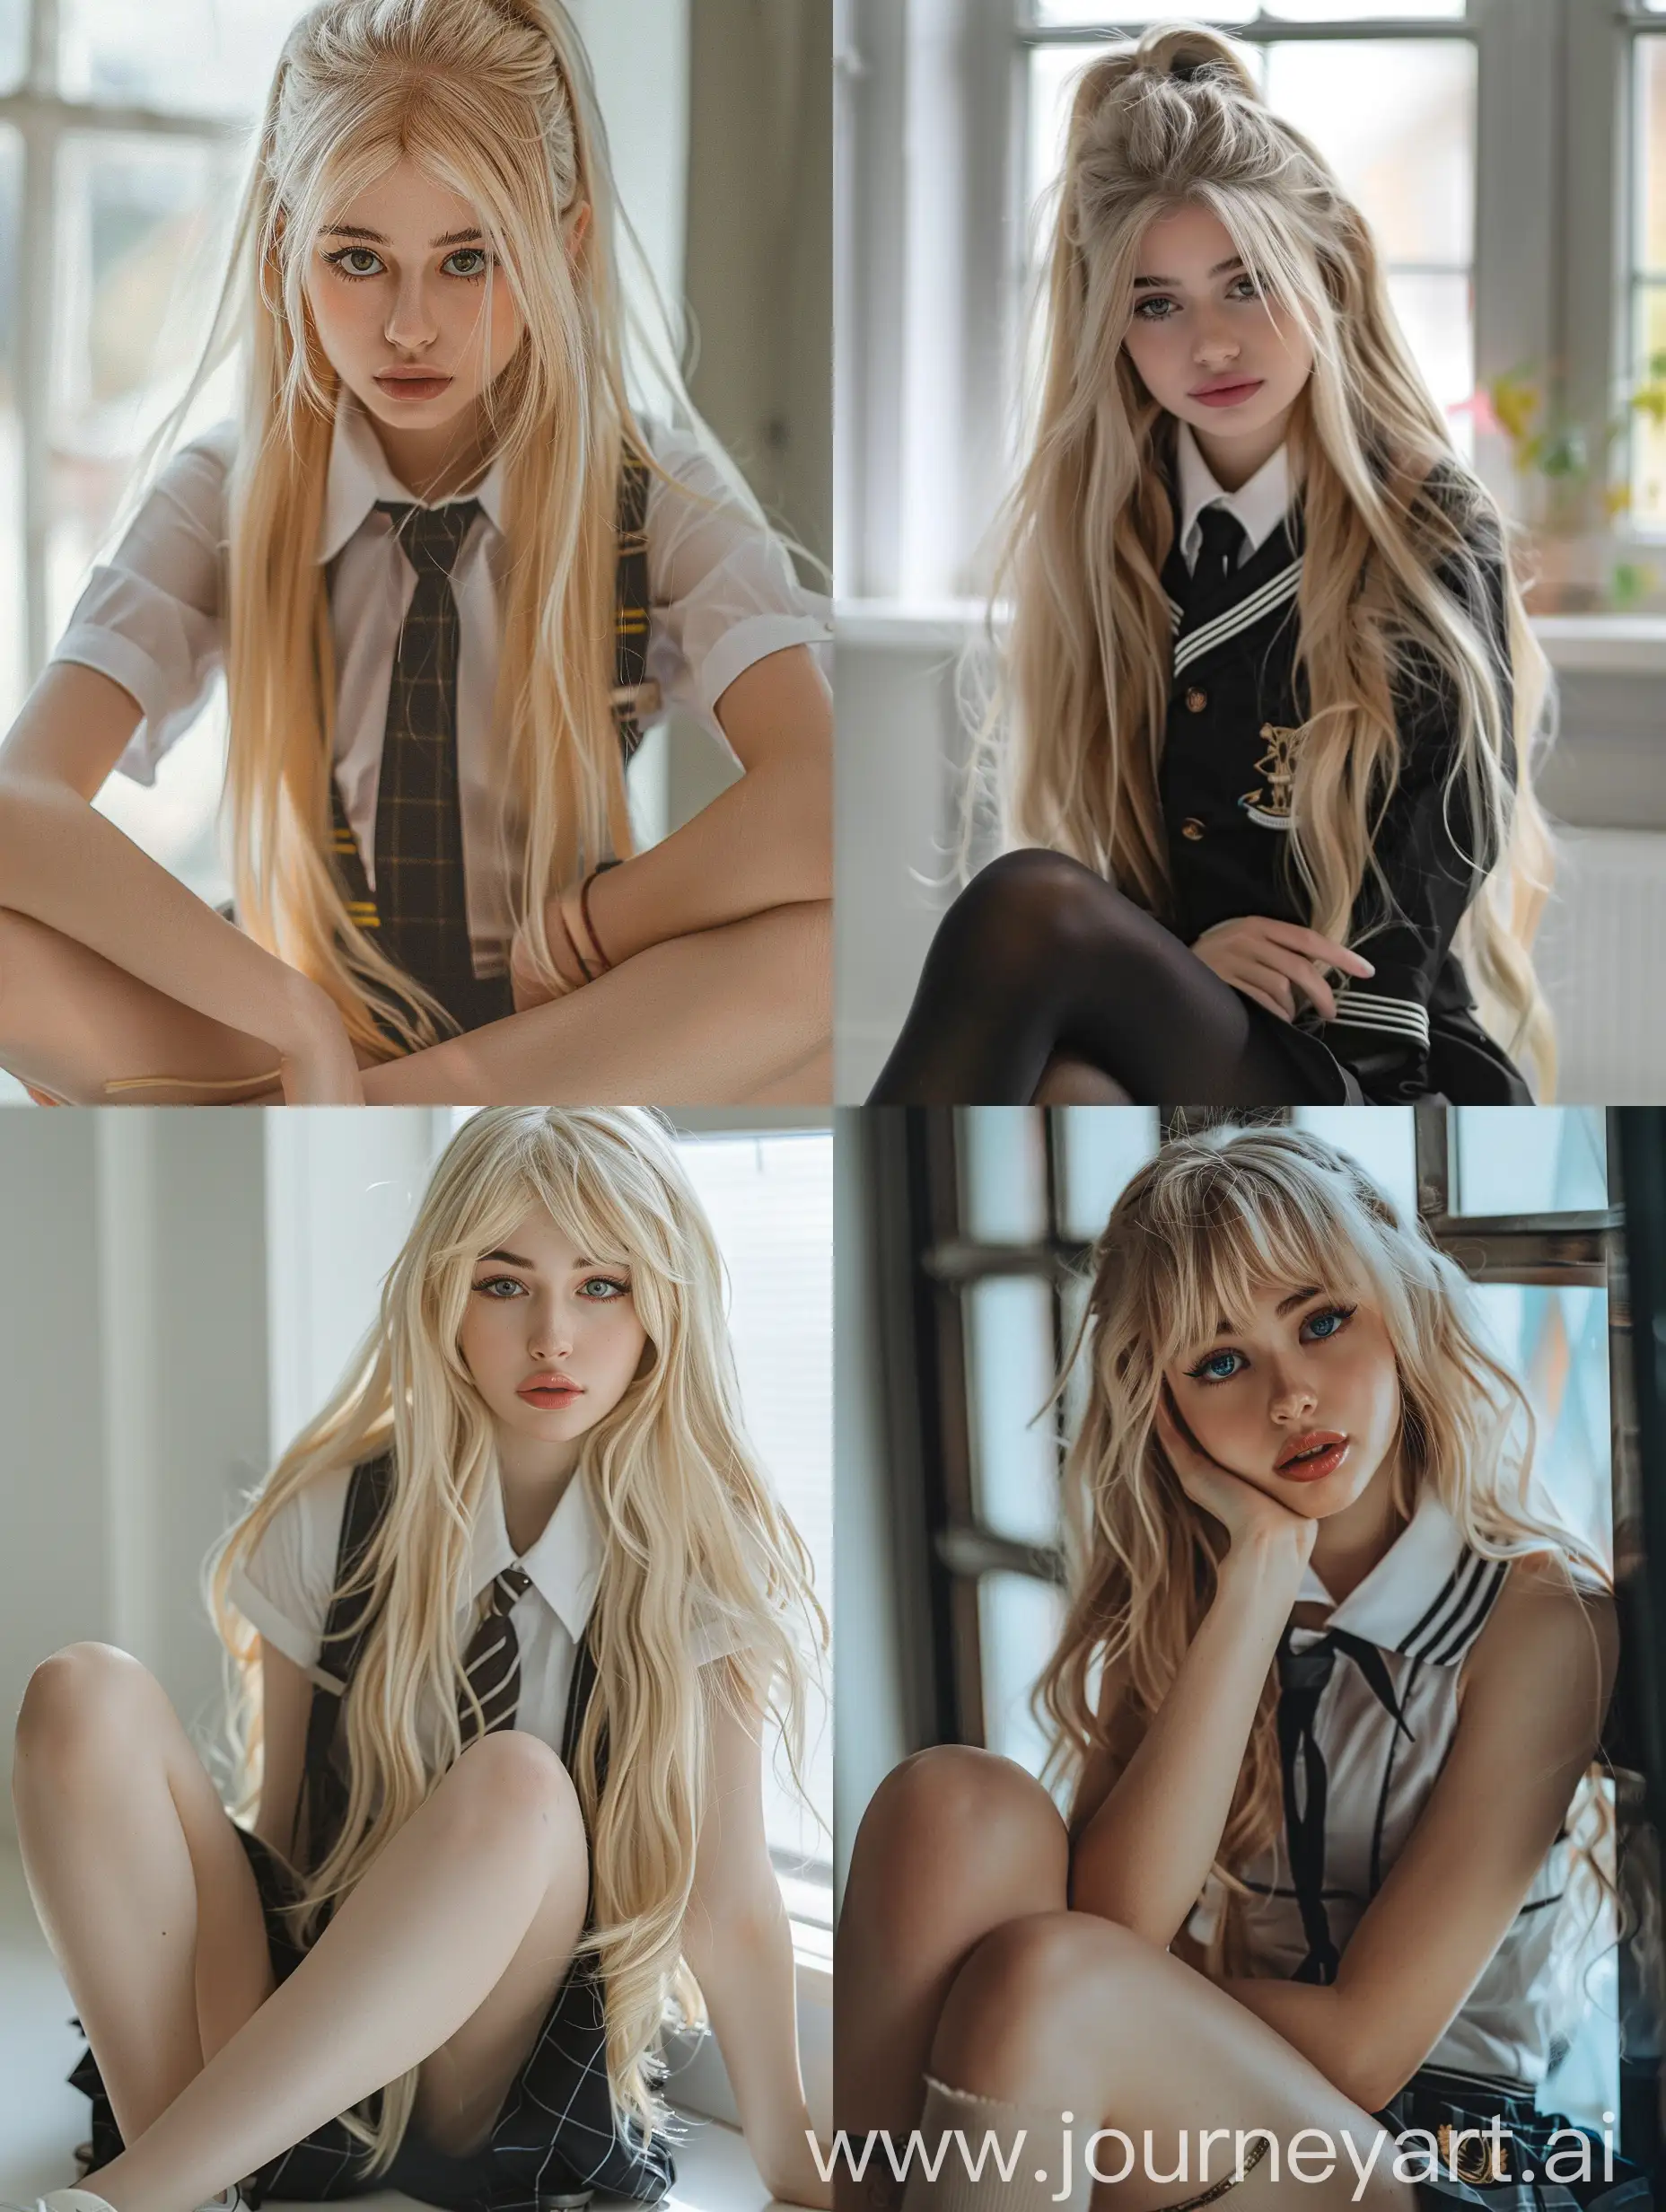 1 girl, long blond hair, 18 years old, influencer, beauty,   in the school, school uniform, makeup, , fullbody, fitness, sitting, crossed legs, down view